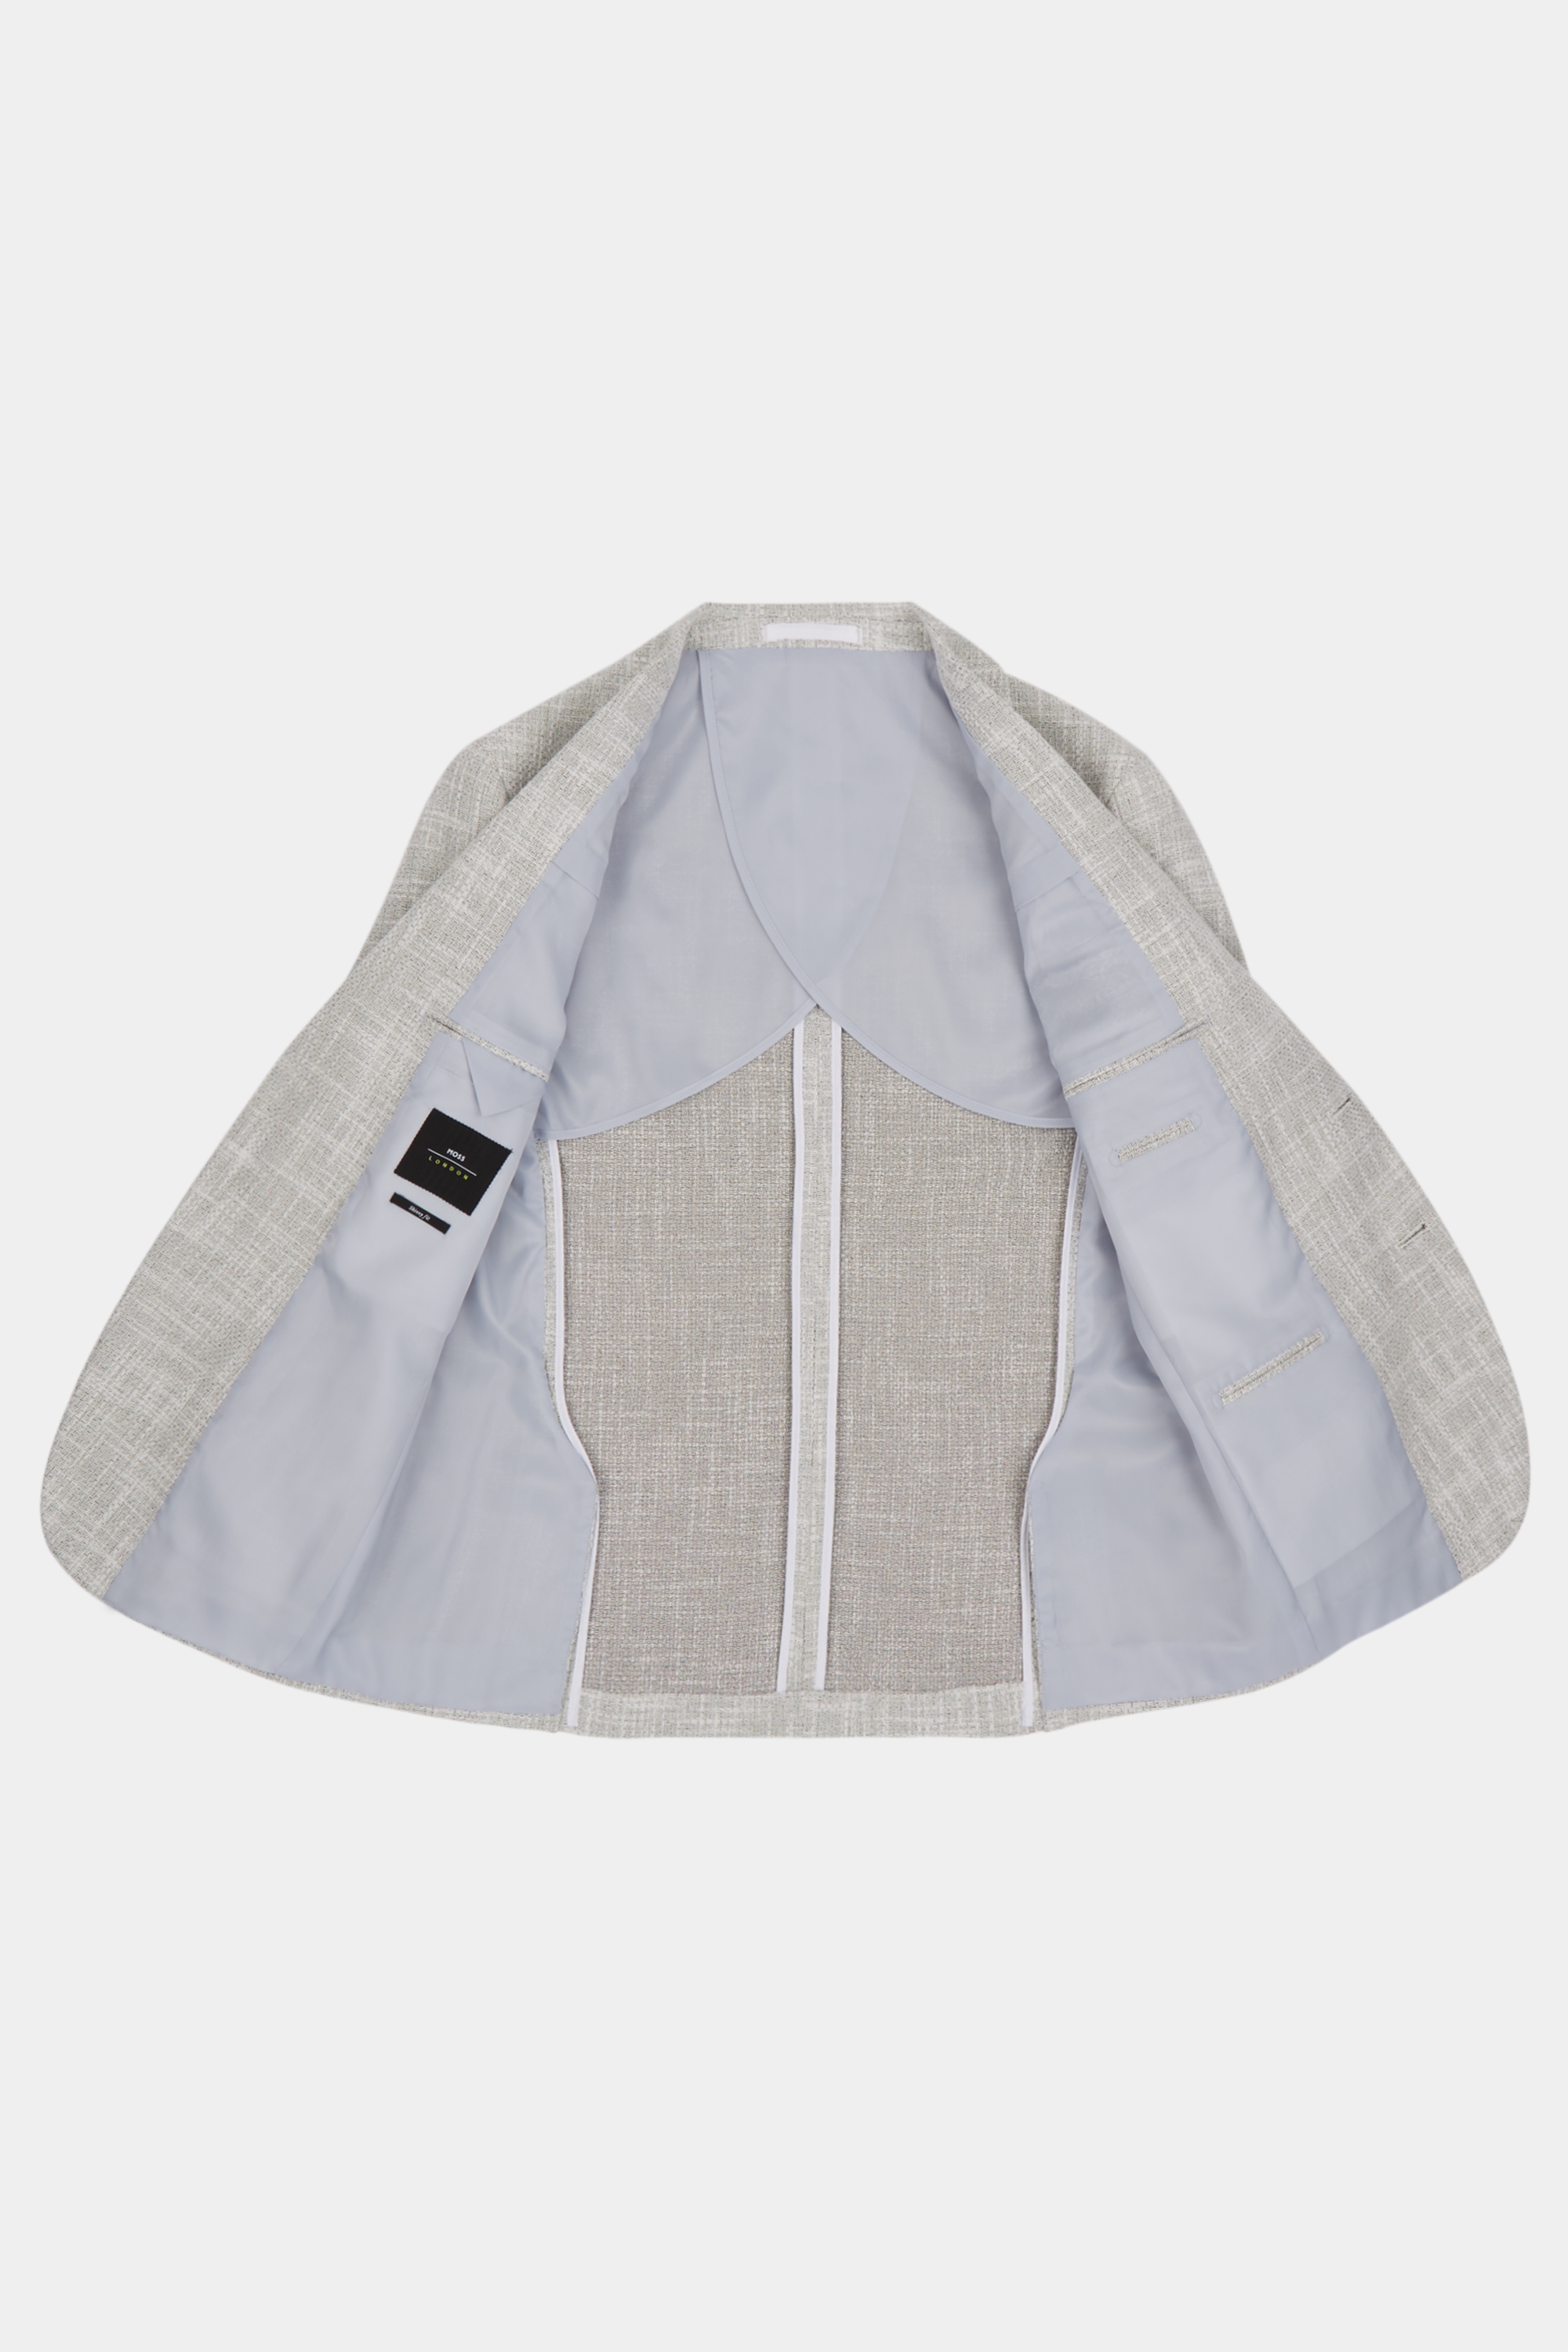 Moss London Slim Fit Light Grey Texture Jacket | Buy Online at Moss